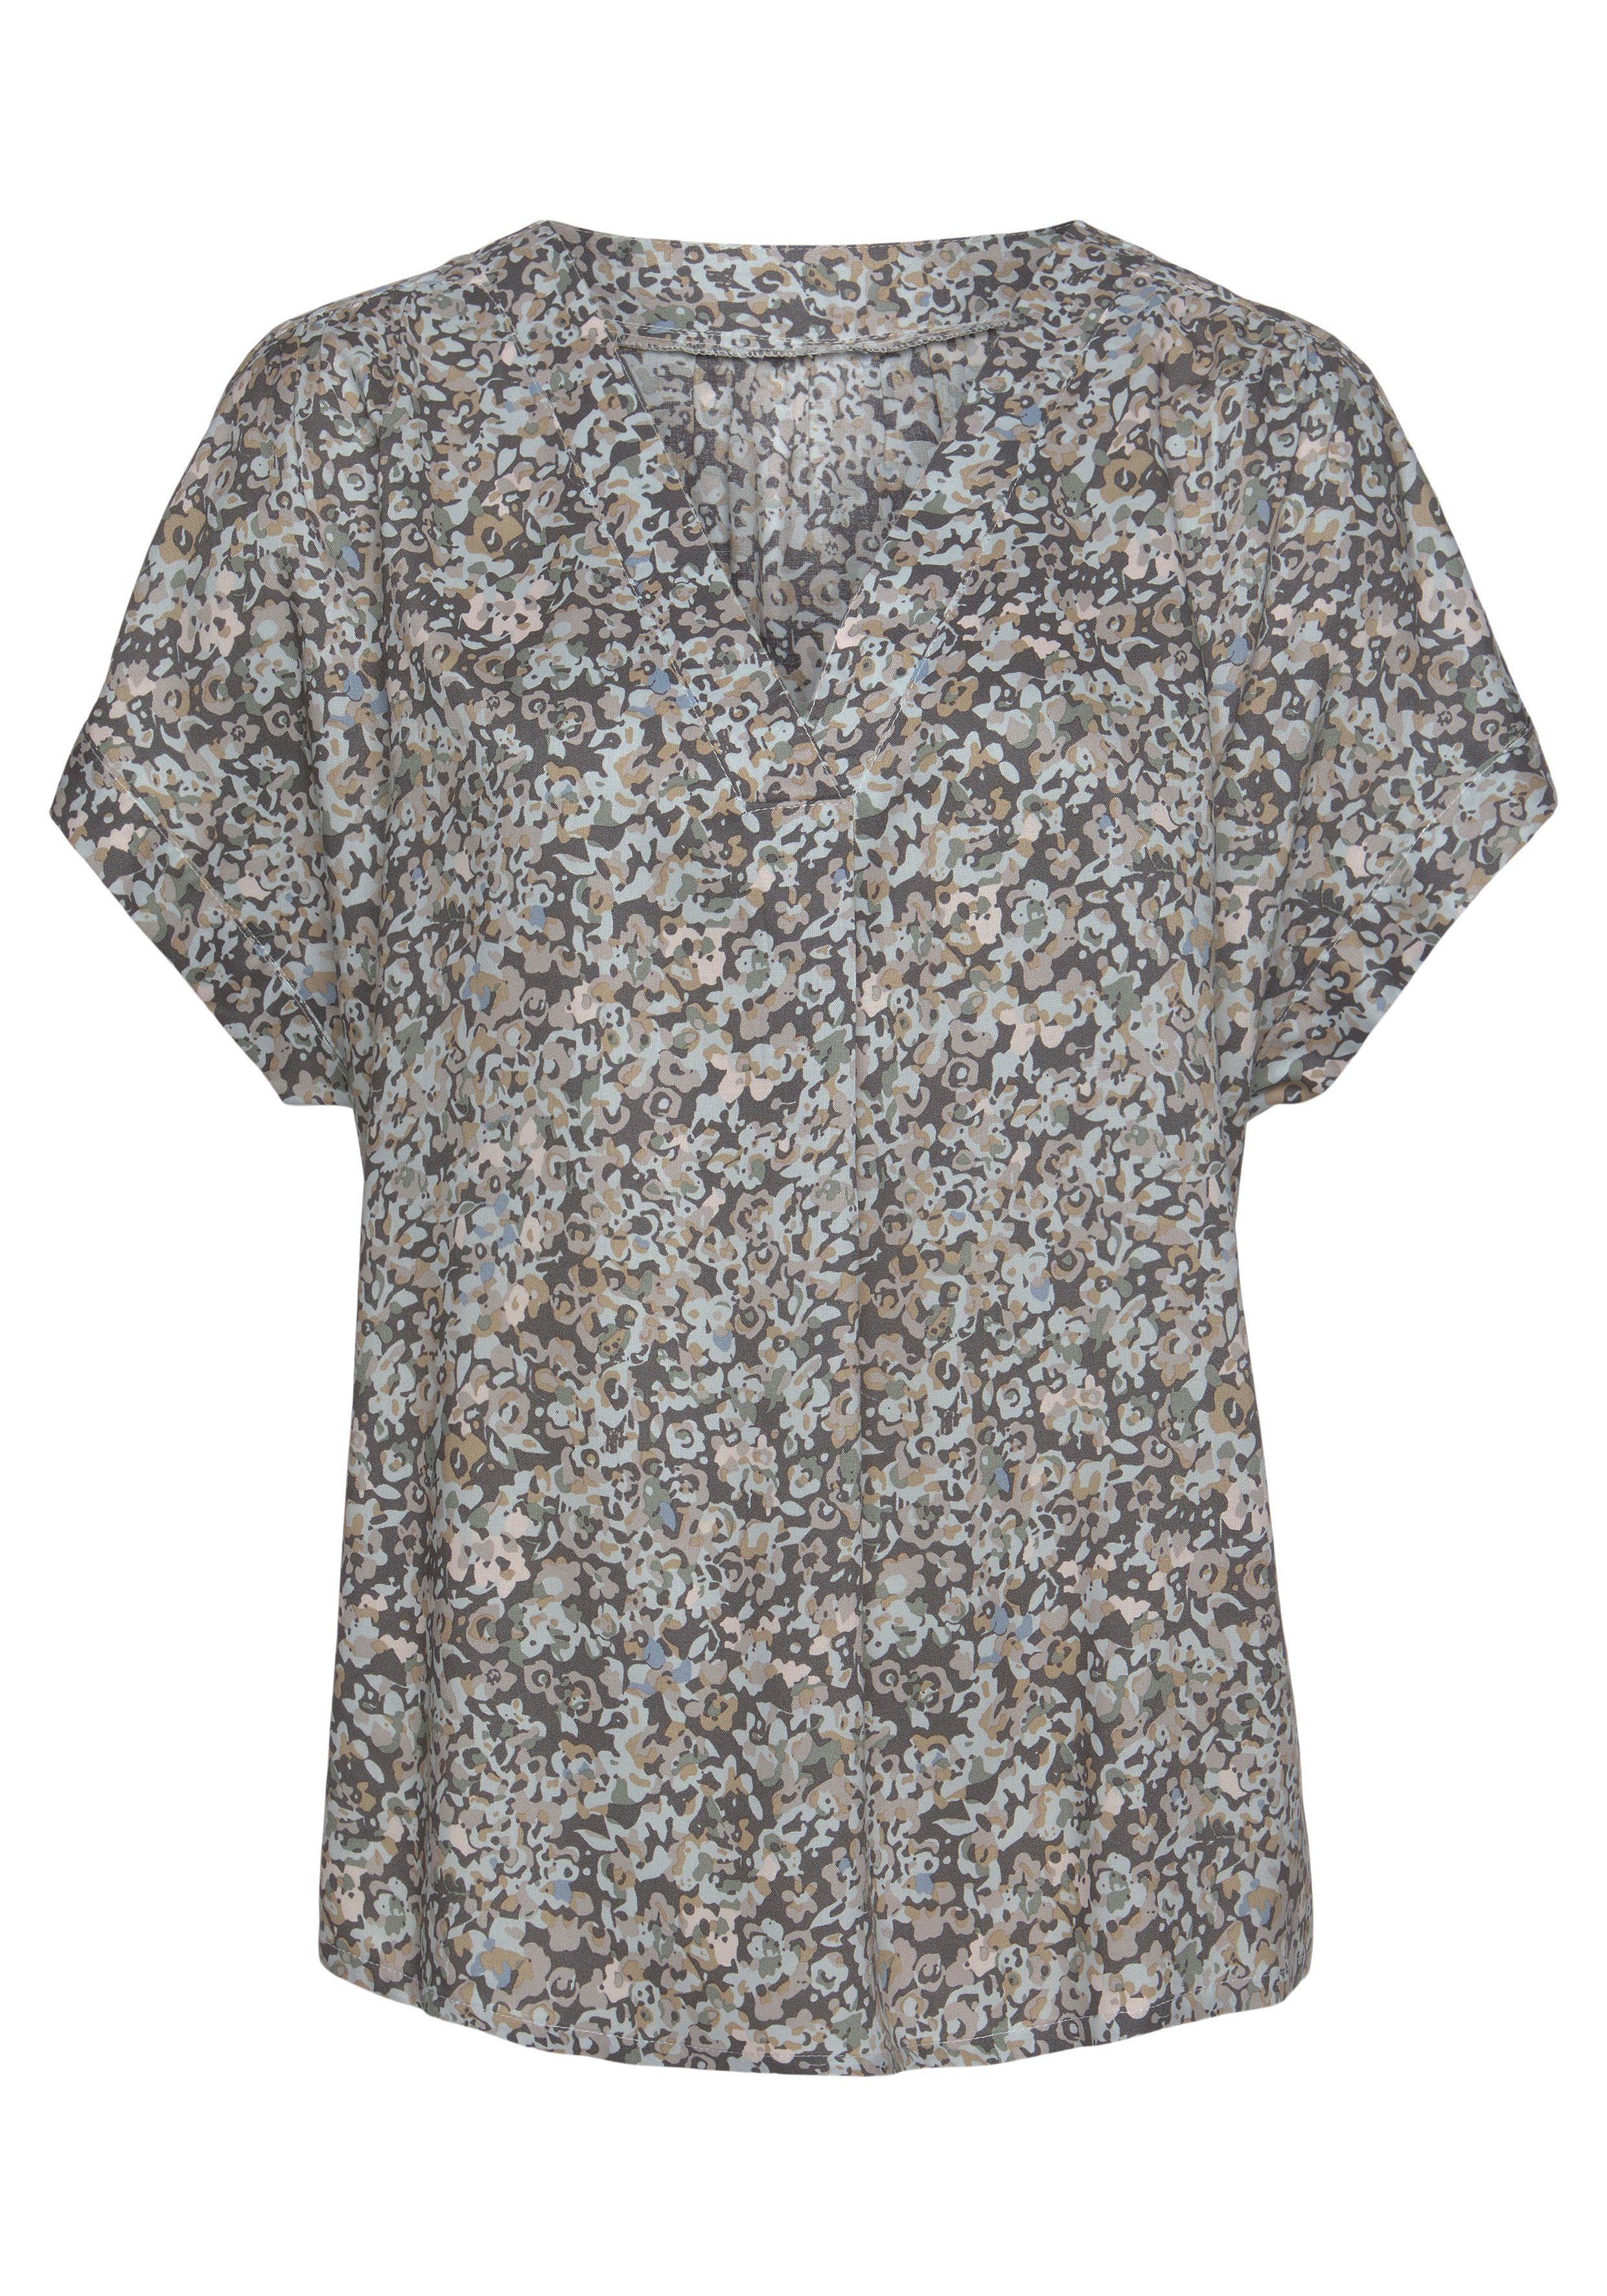 Vivance Kurzarmbluse mit Blümchendruck und V-Ausschnitt, Damenbluse Blusenshirt